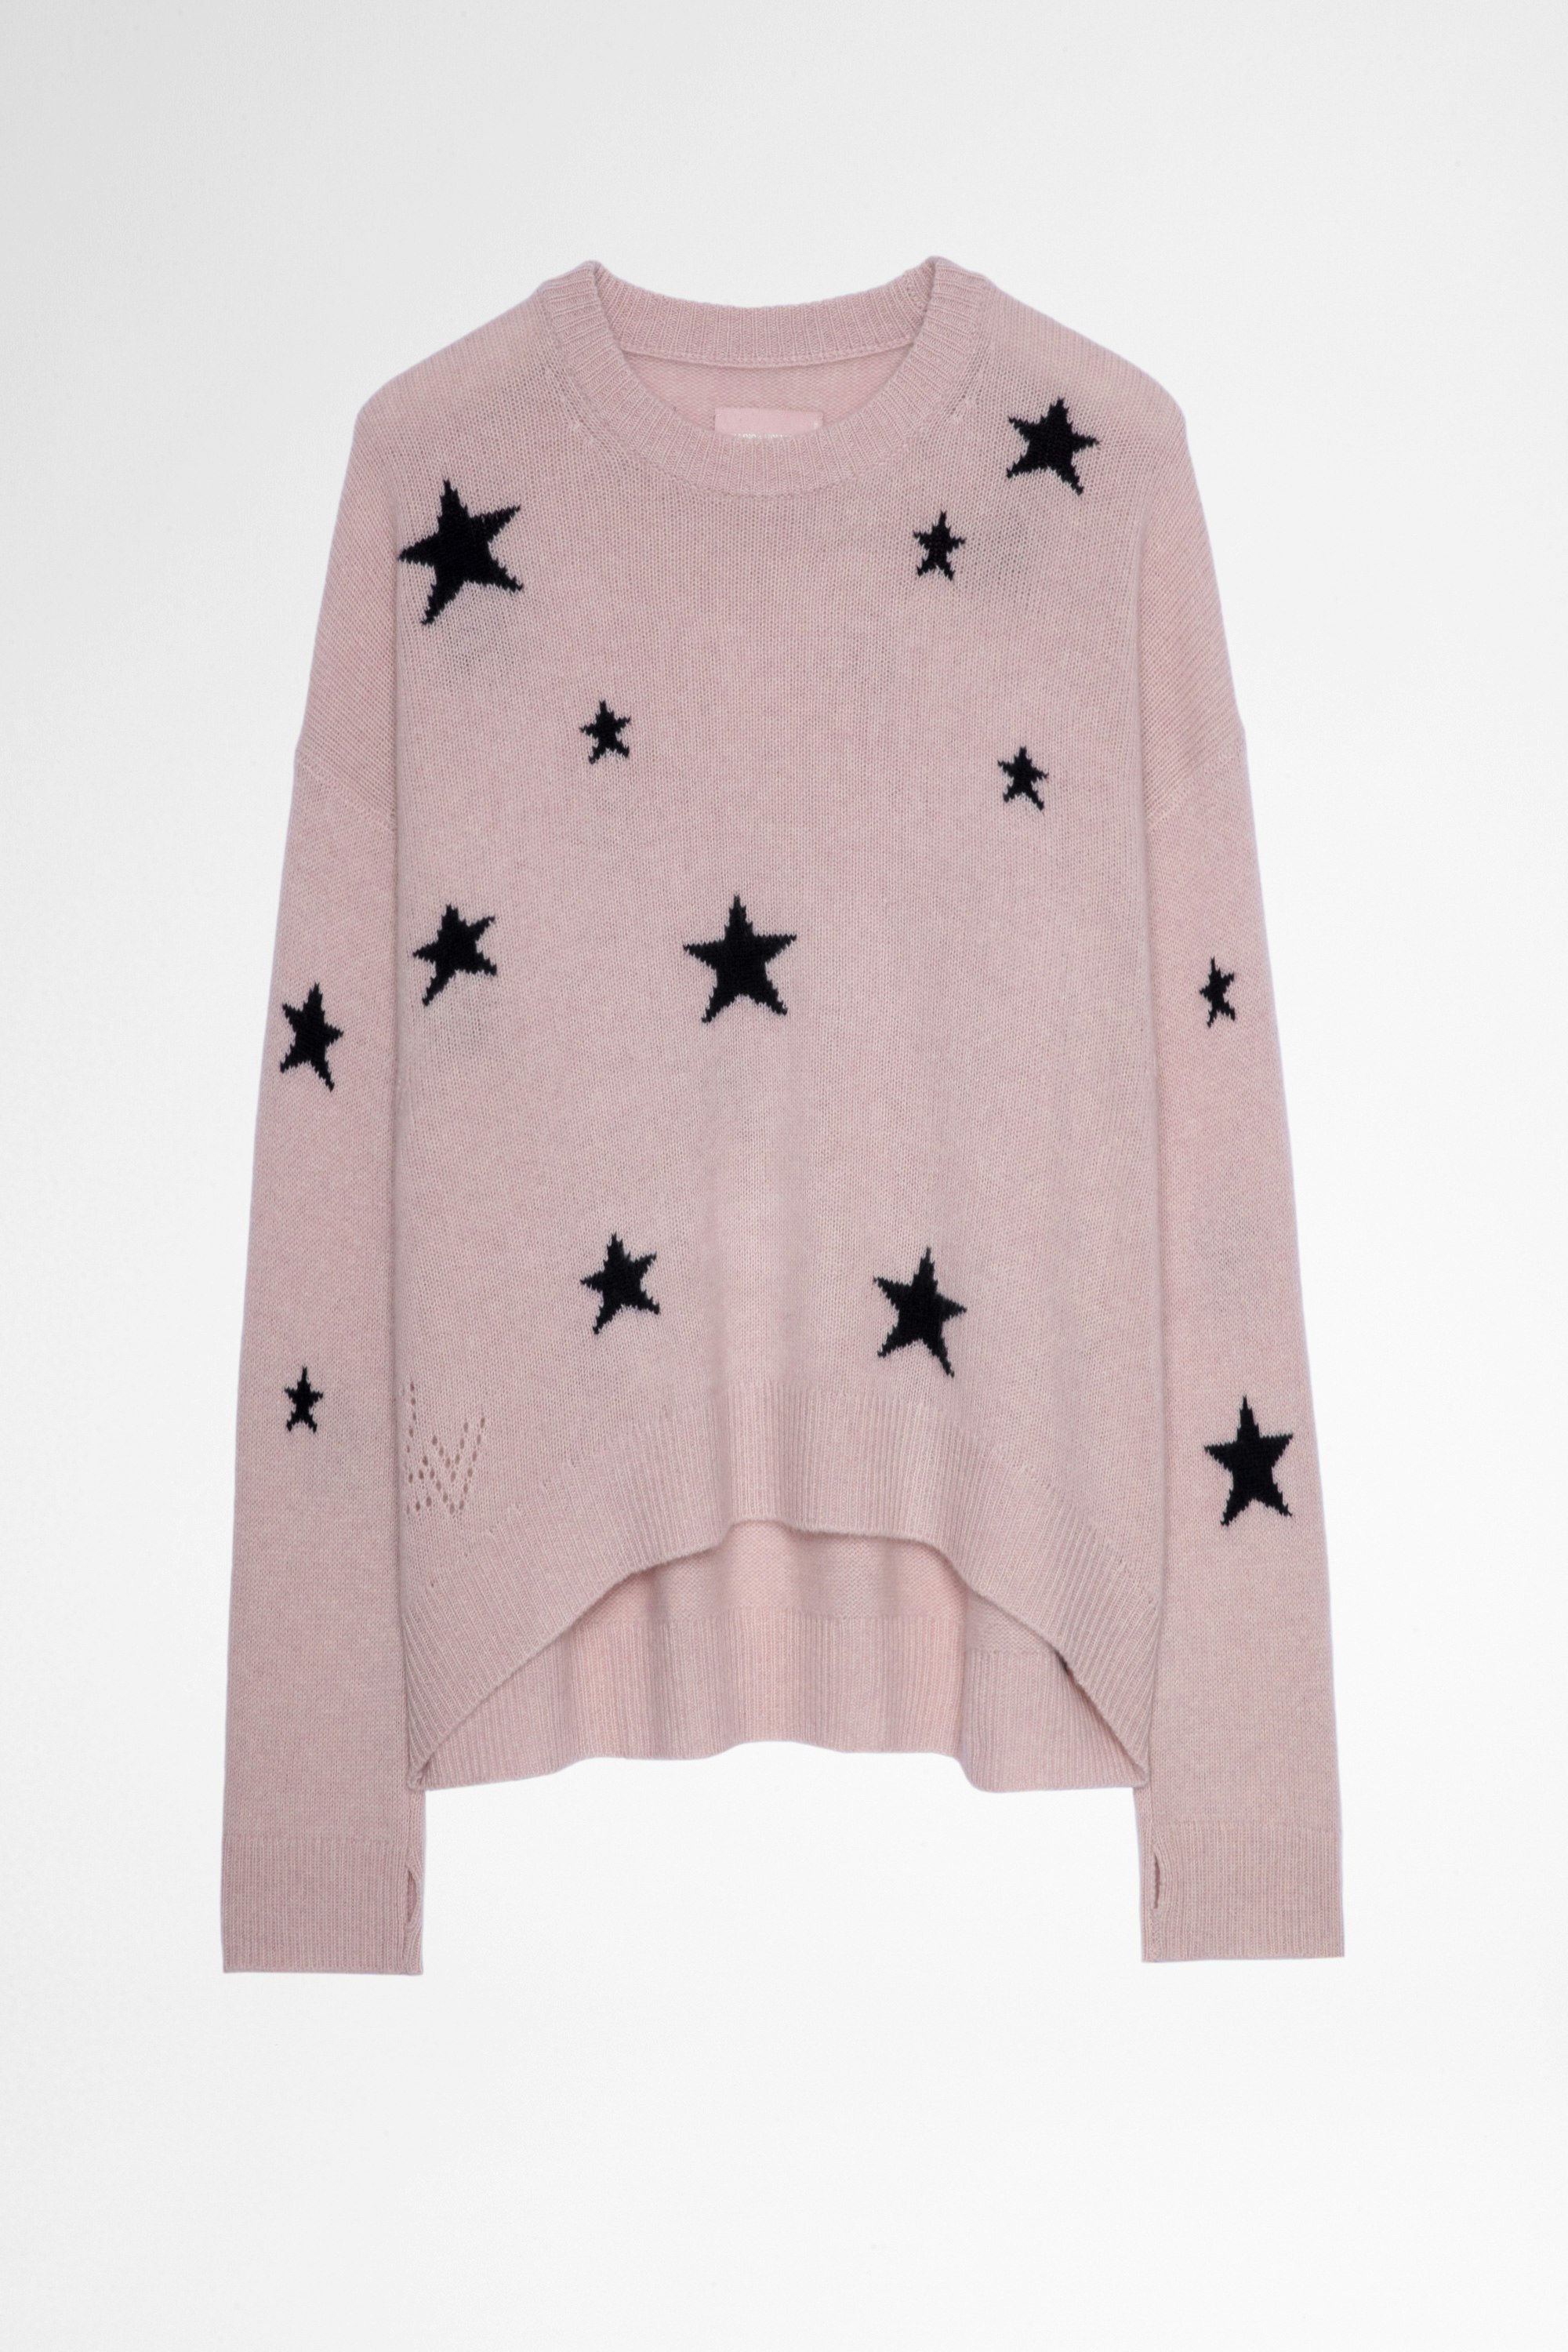 Markus Stars カシミヤスウェット Women's pink cashmere sweater with star pattern